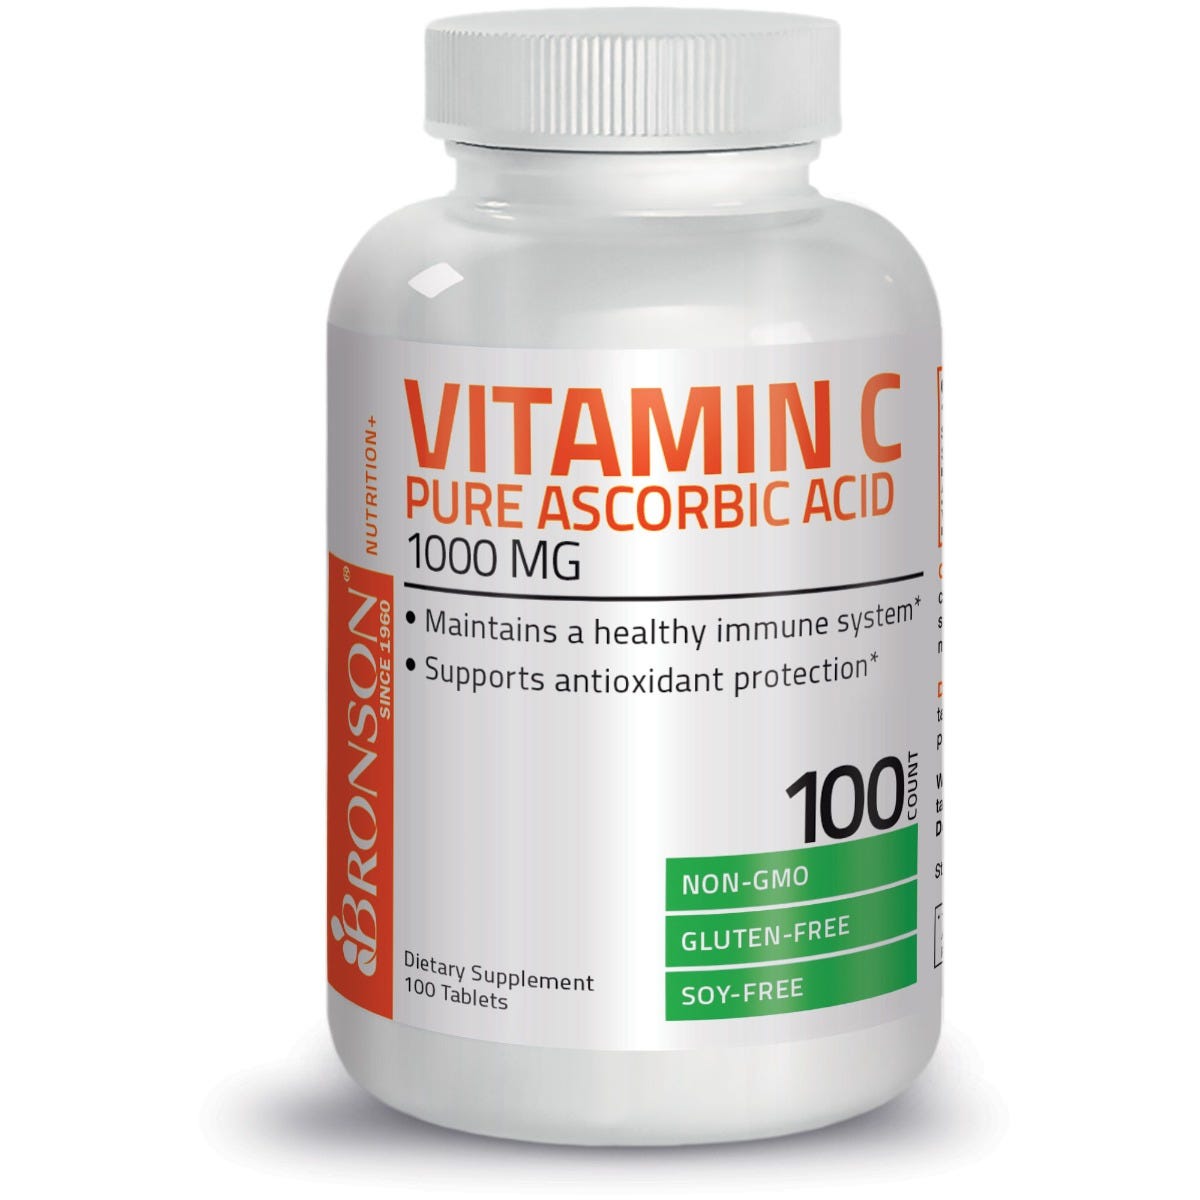 Vitamin C Pure Ascorbic Acid - 1,000 mg